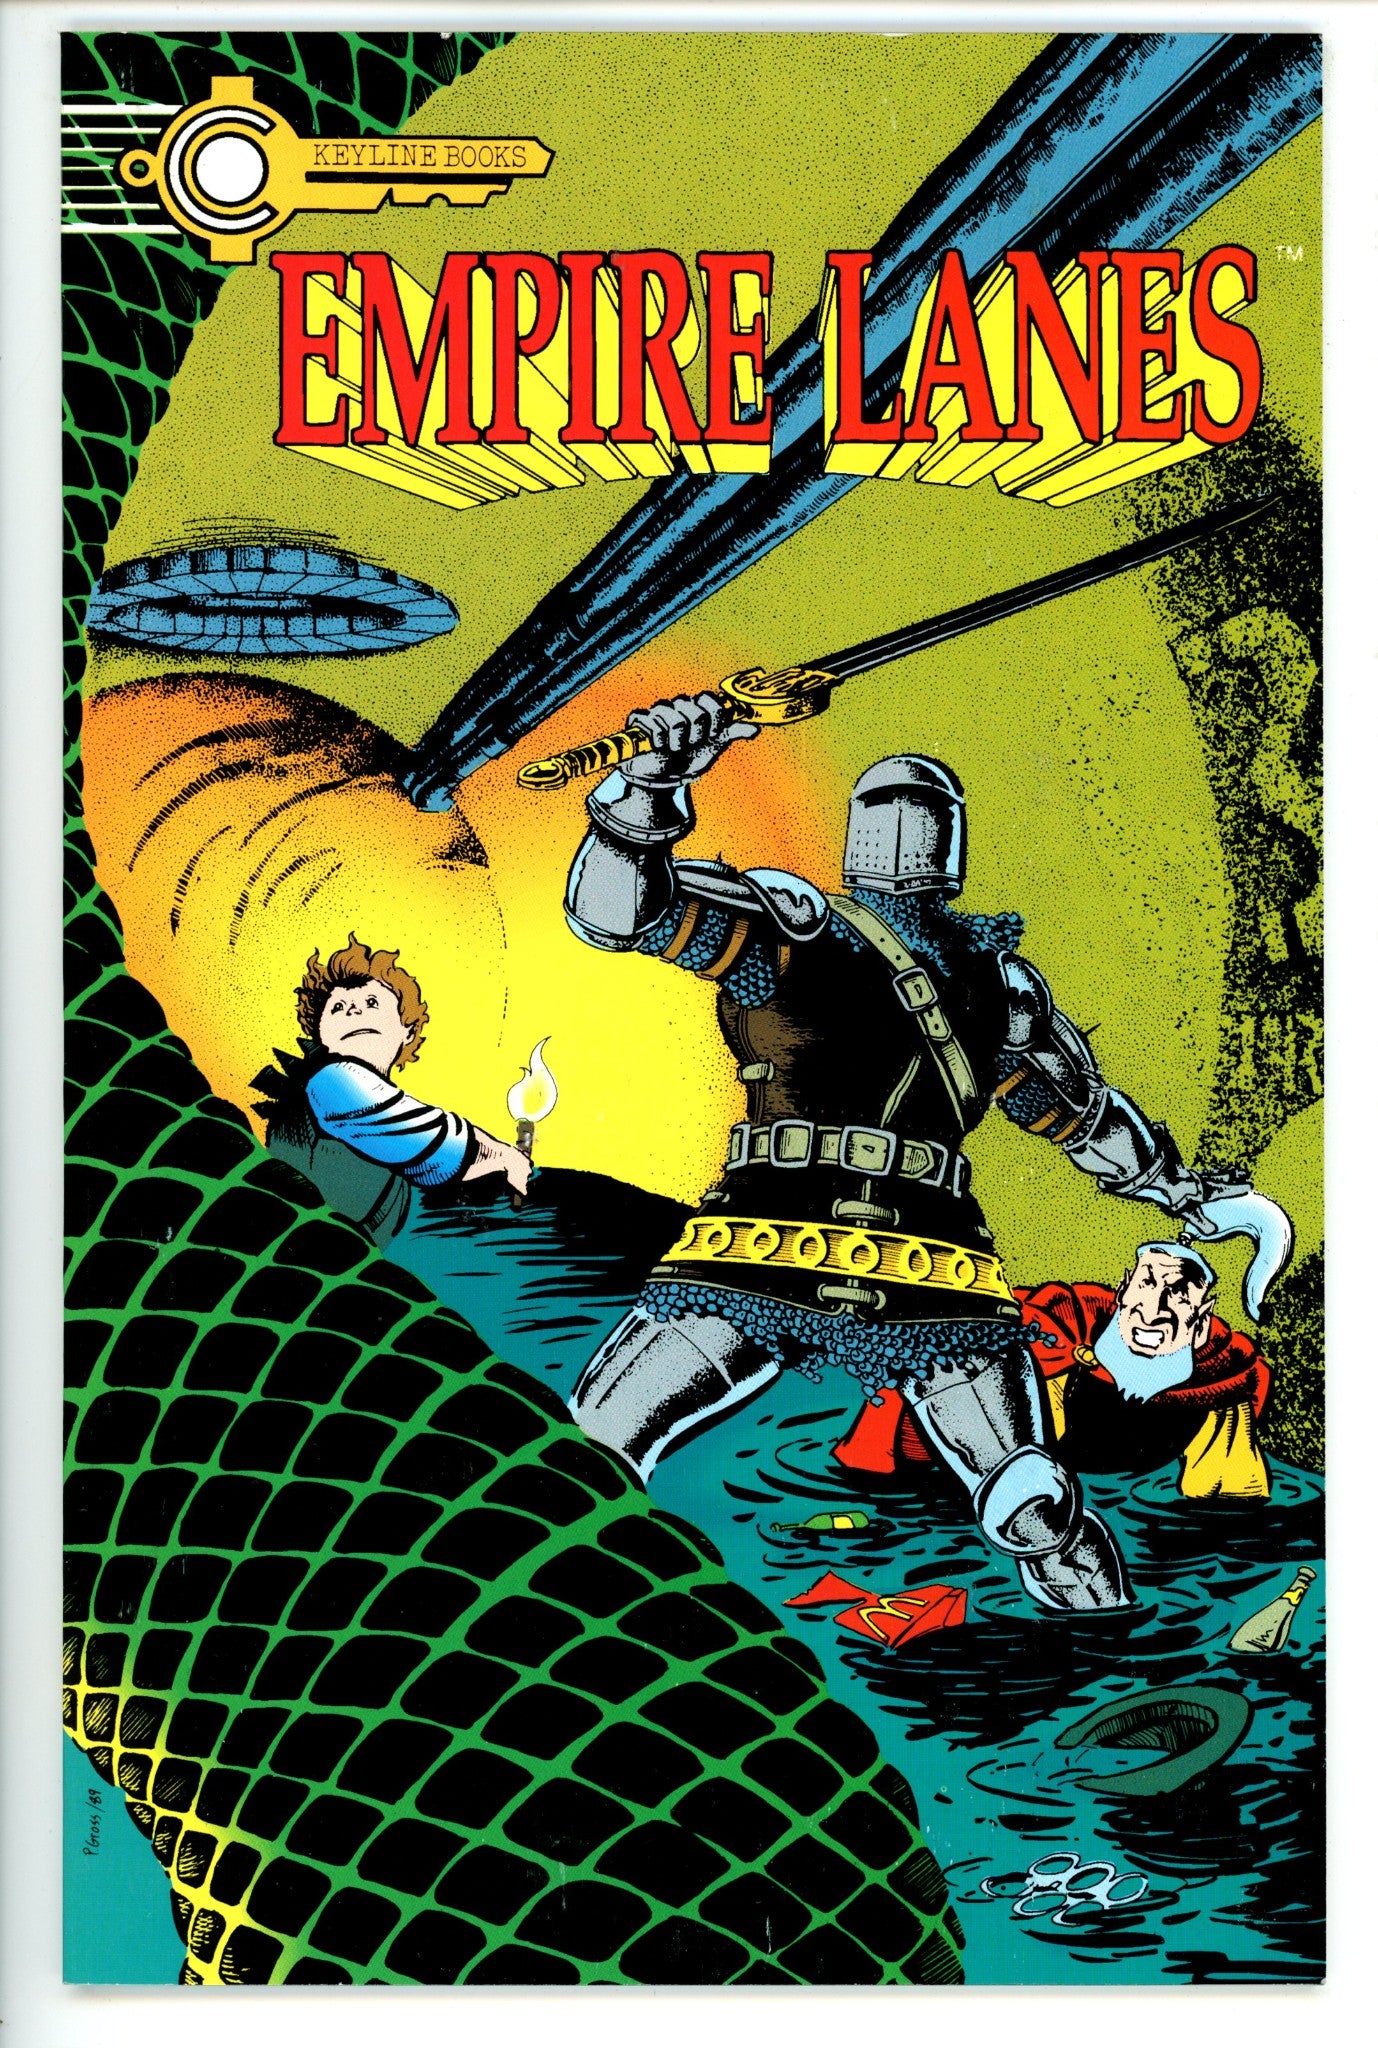 Empire Lanes 1